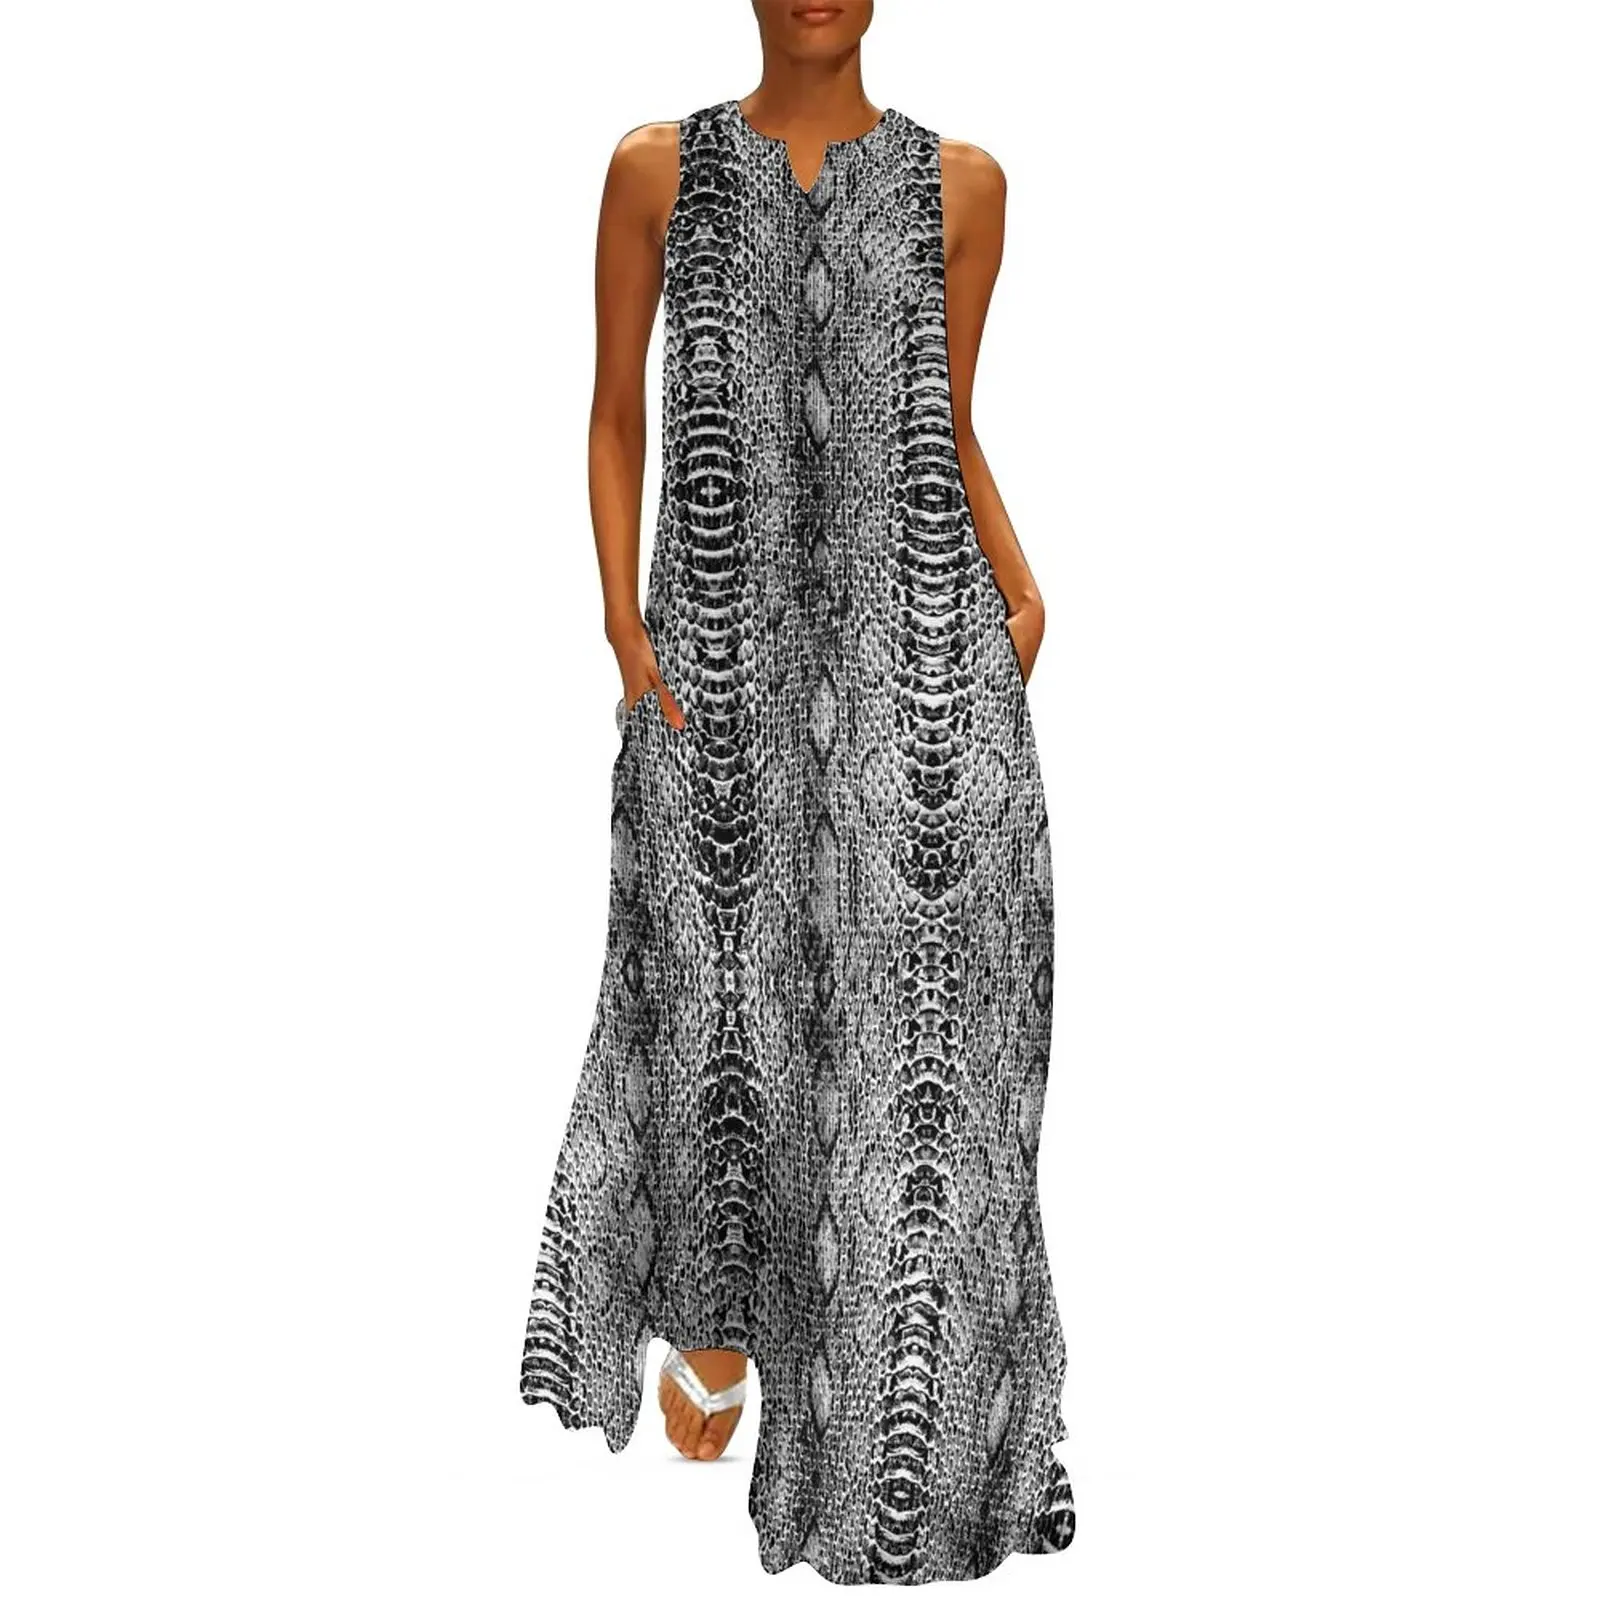 

Snakeskin Print Dress Summer Black And White Aesthetic Casual Long Dresses Woman Kawaii Maxi Dress Gift Idea